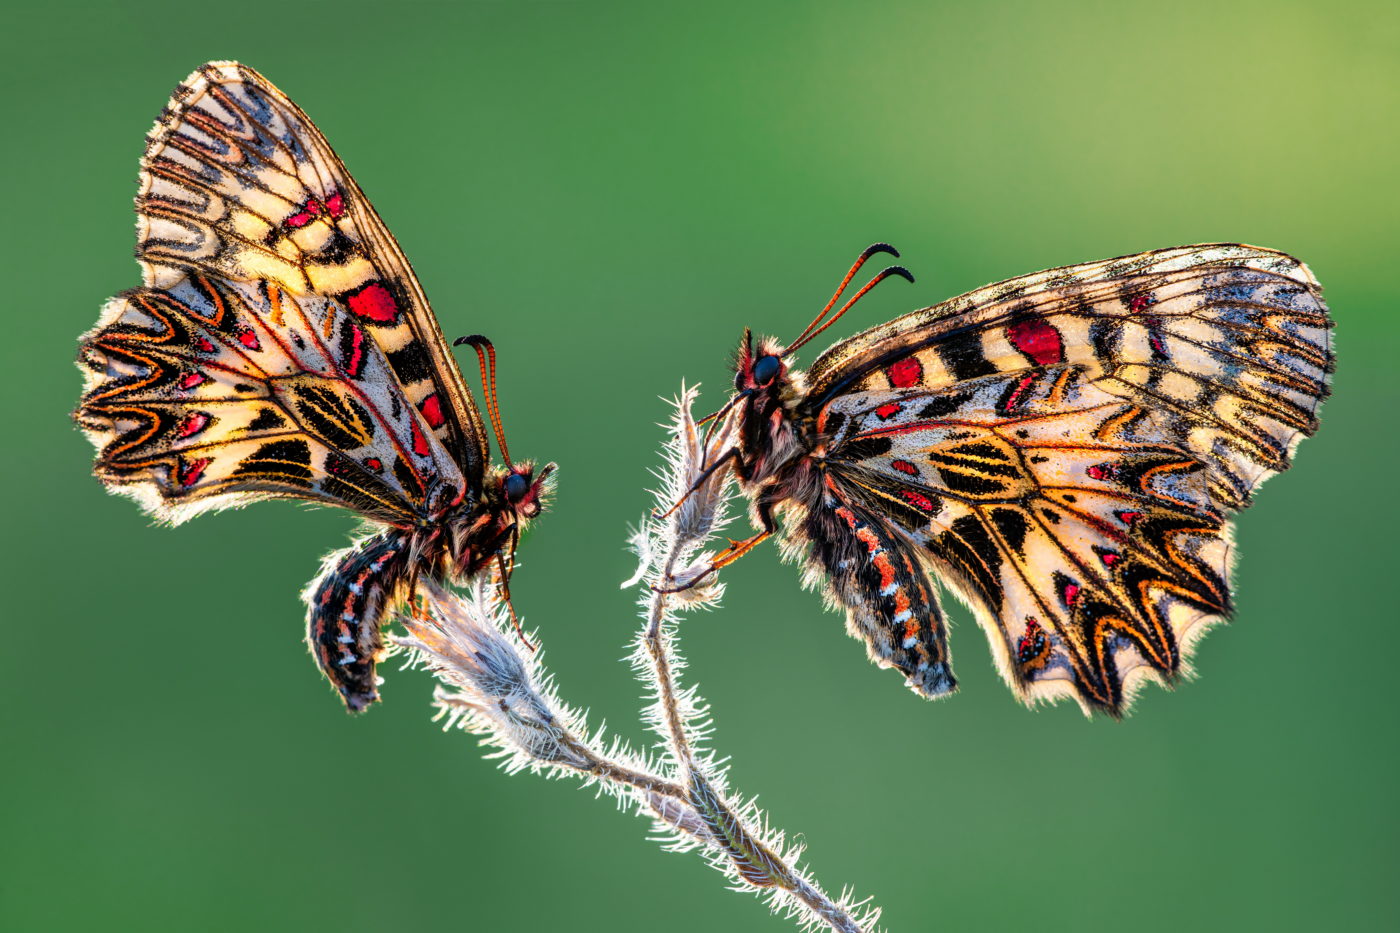 Two backlit Southern festoon butterflies, Zerynthia polyxena, on a plant